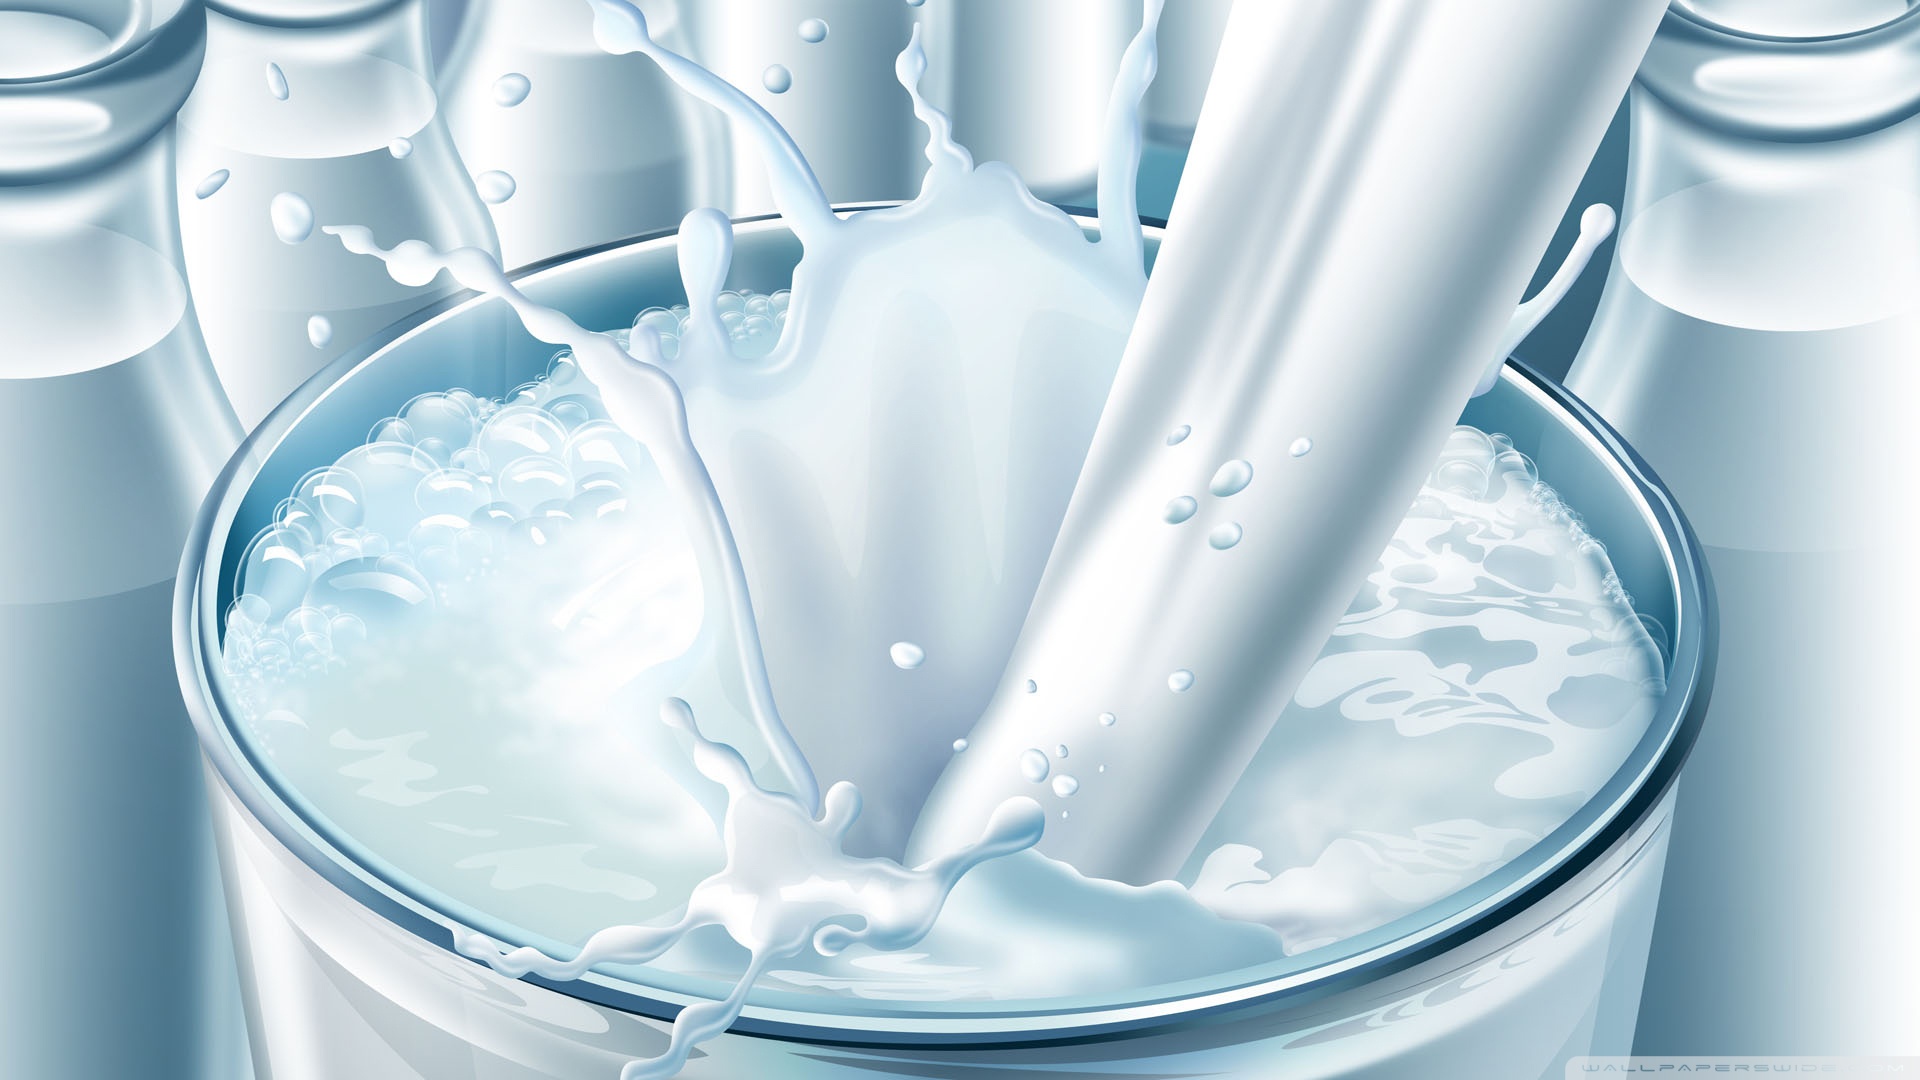 Free download Milk Carton Wallpaper 18 1920 X 1080 stmednet [1920x1080] for  your Desktop, Mobile & Tablet | Explore 56+ Milk Wallpaper | Design Milk  Desktop Wallpaper, Dairy Milk Chocolate Wallpapers, Design Milk Wallpaper